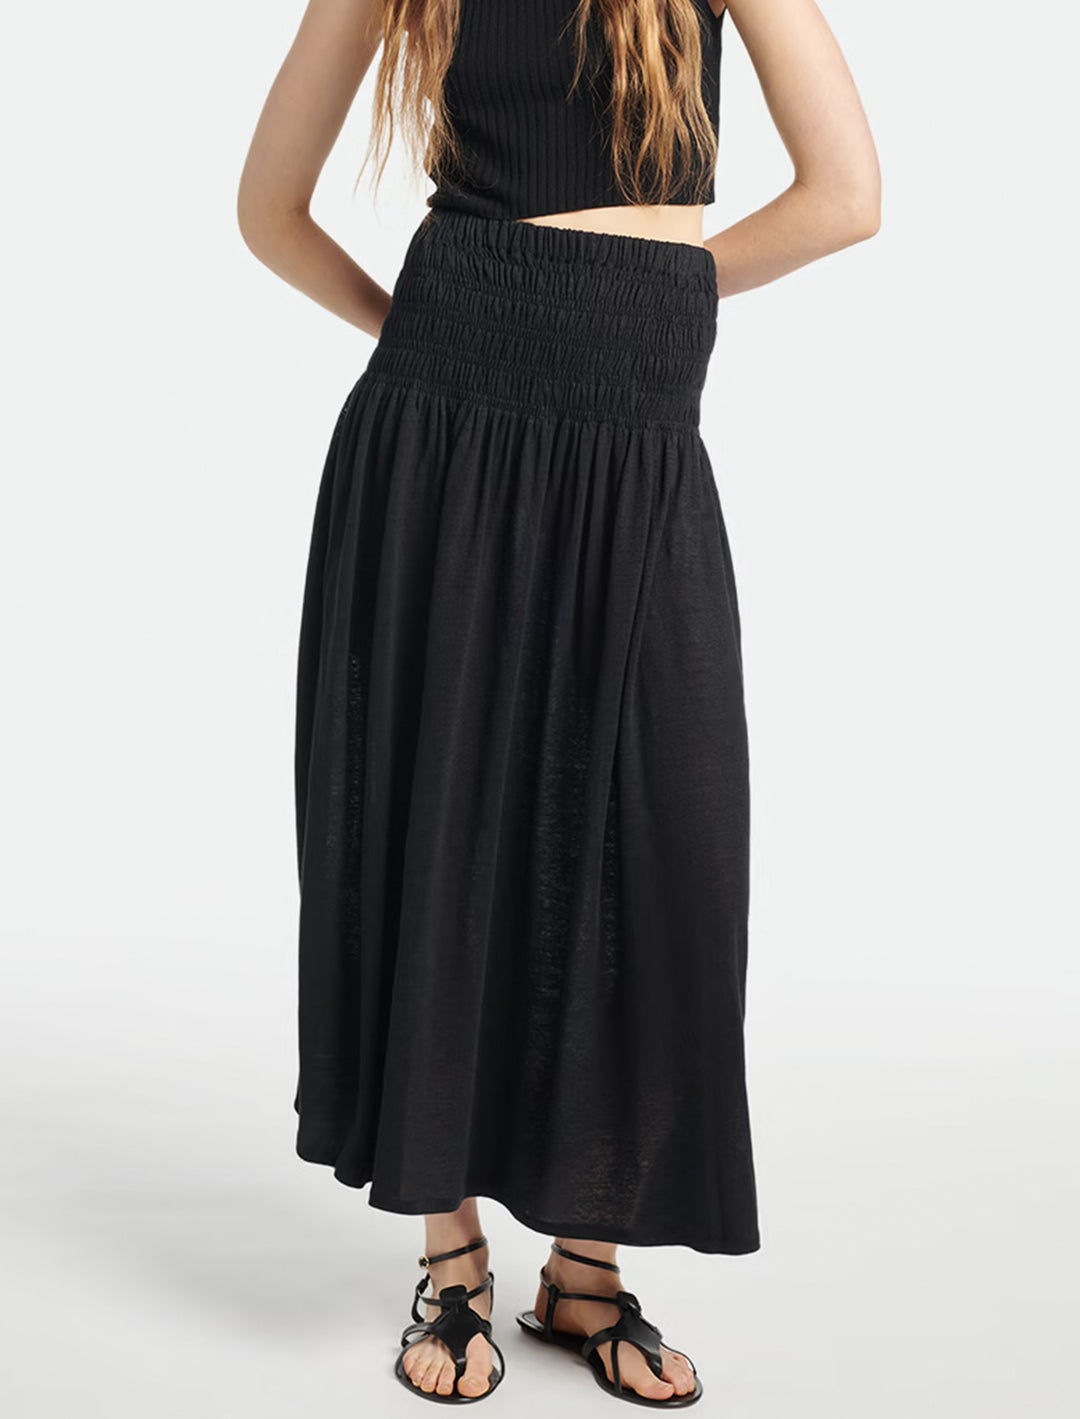 Model wearing Vanessa Bruno's tinoa skirt in noir.